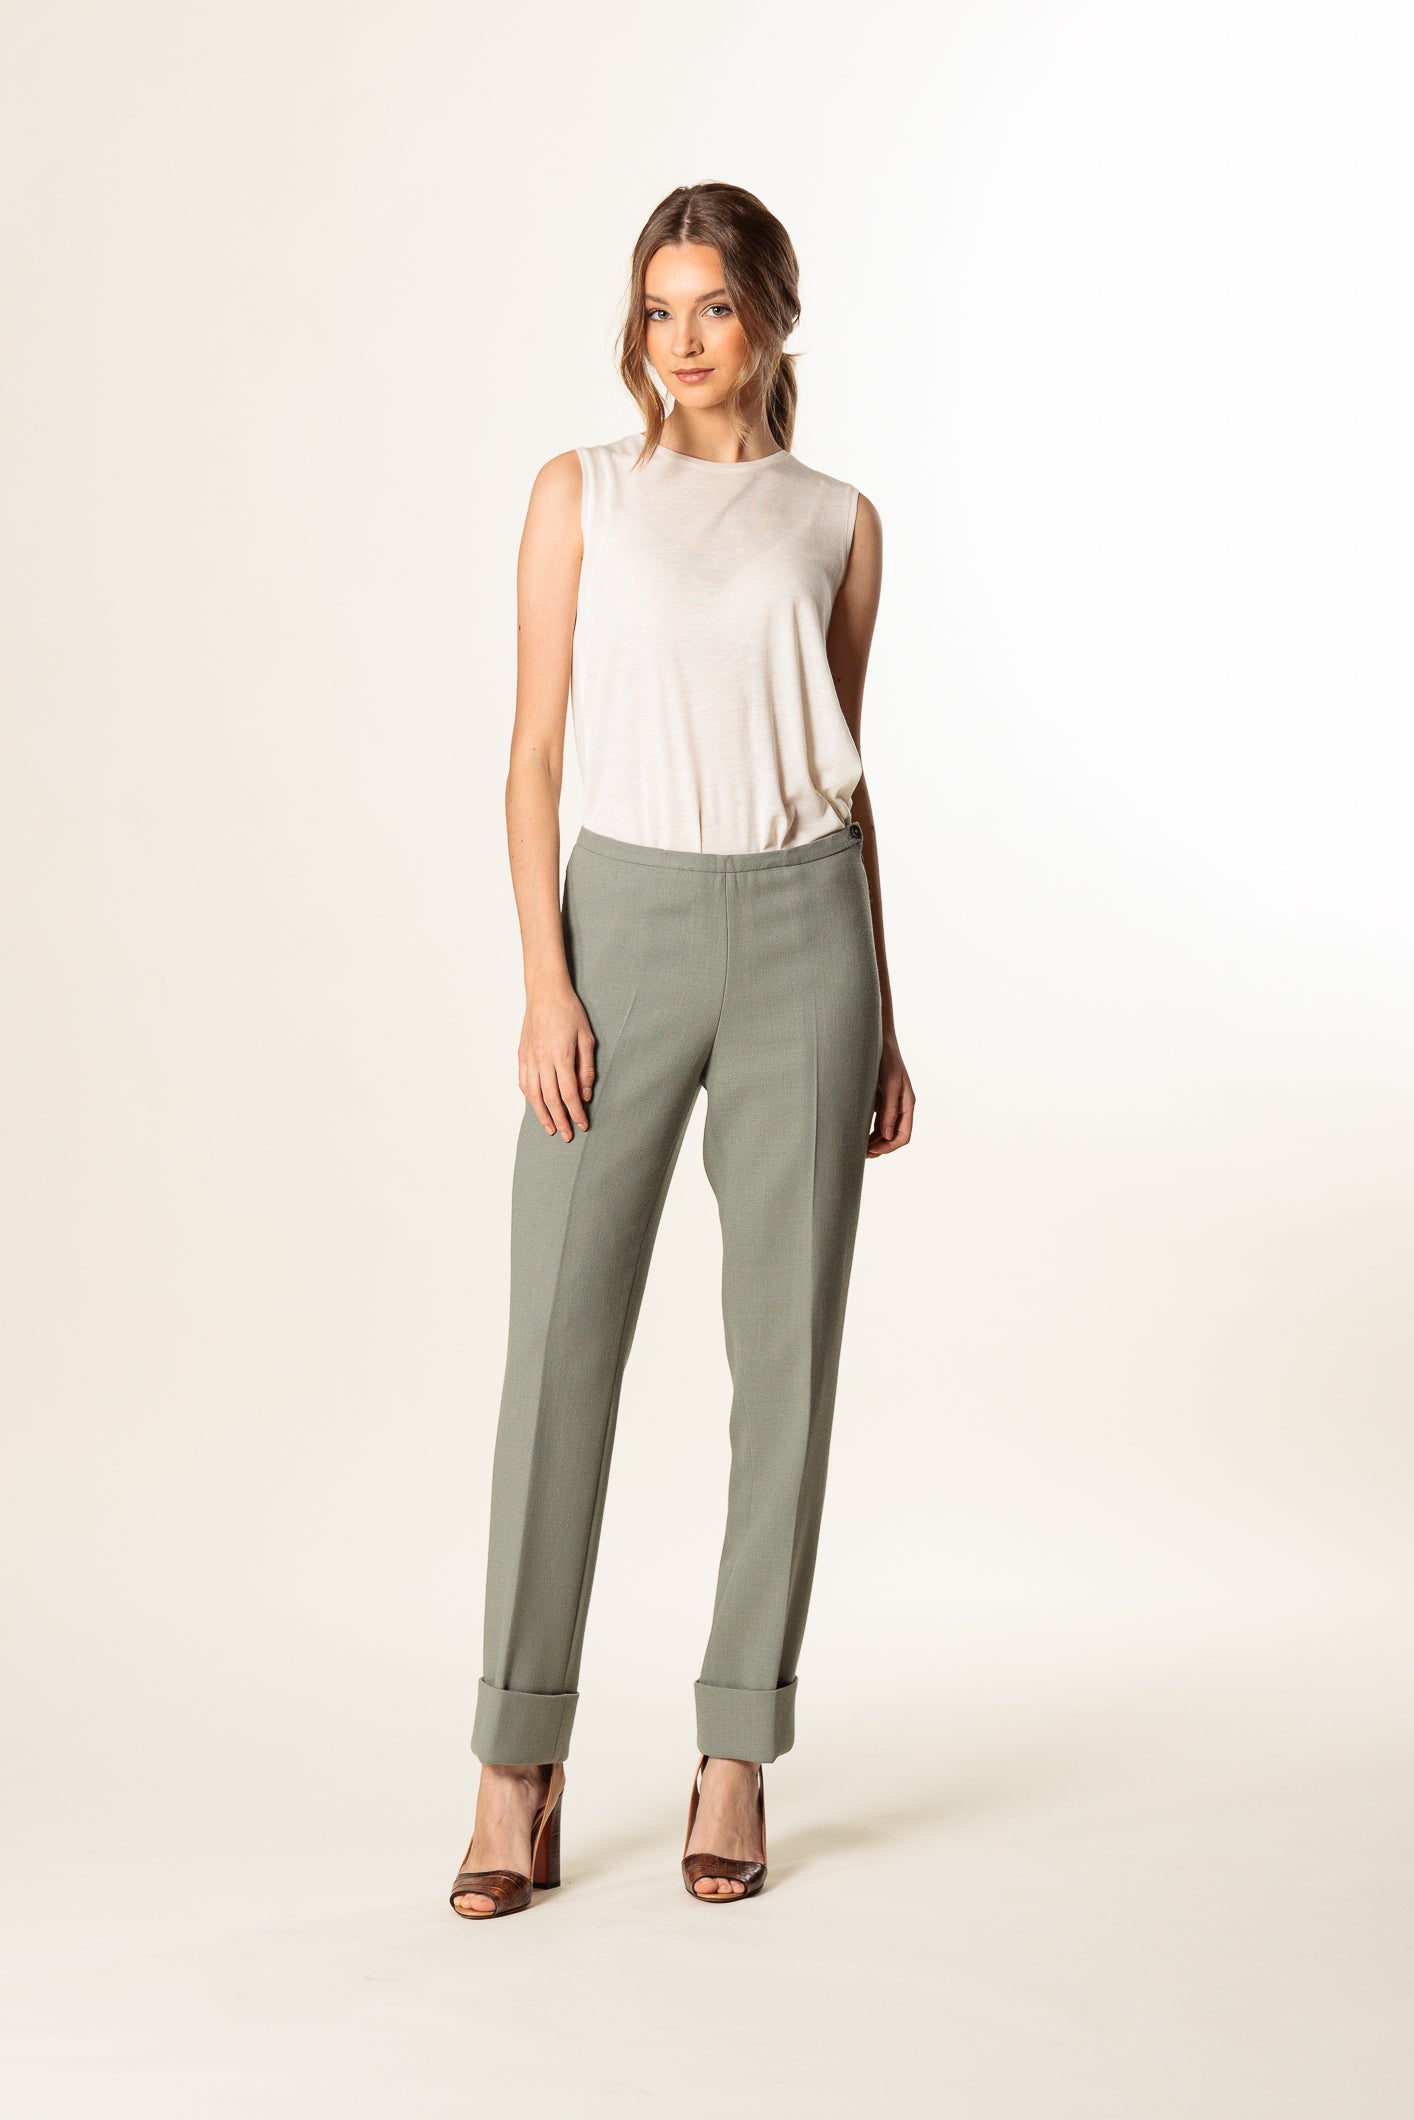 Womens Tu Size UK 8 Green Mix Leaf Print Pull On Linen Blend Jogger Trousers  | eBay